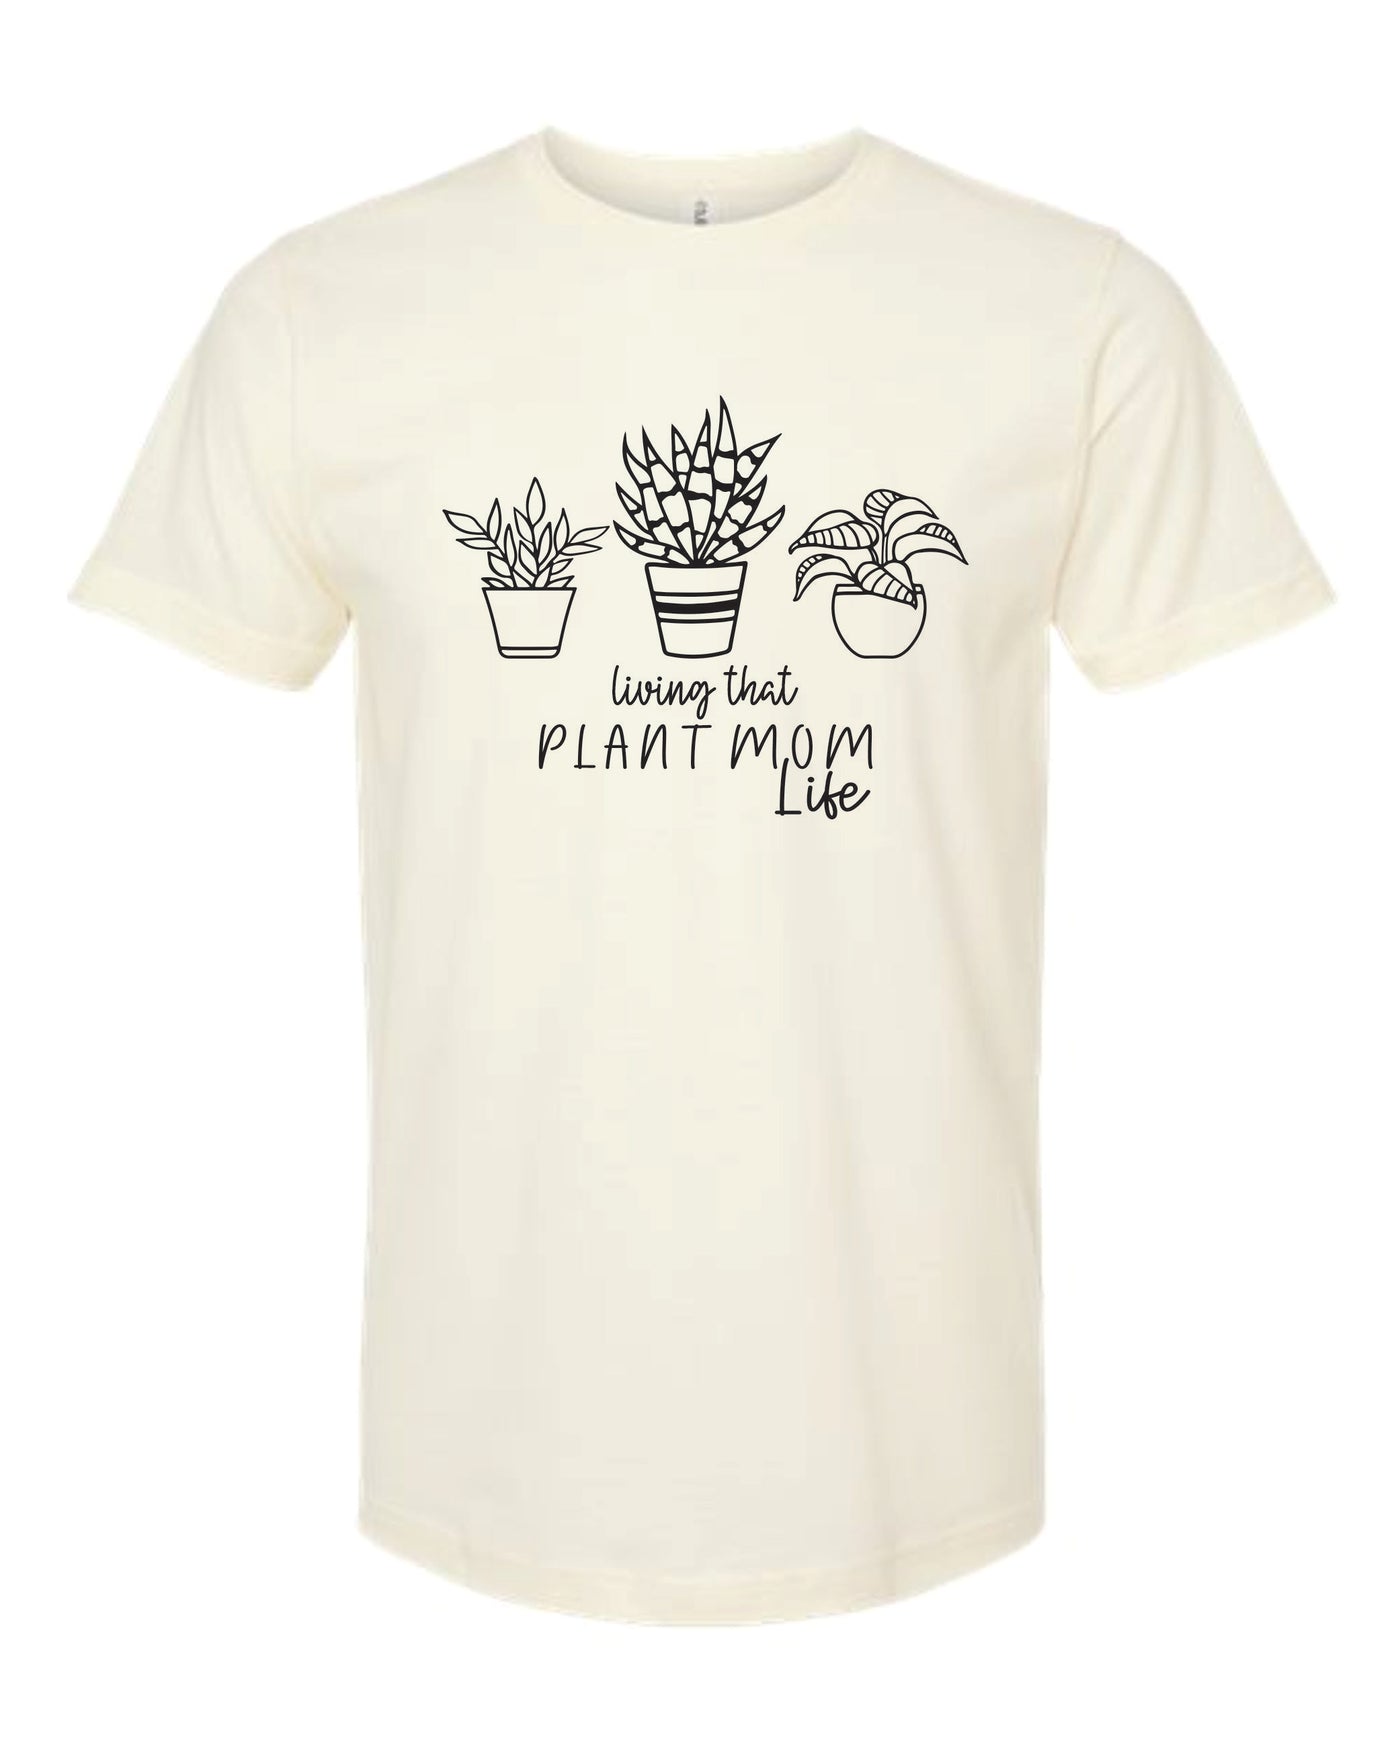 Just Living That Plant Mom Life Short Sleeve T-shirt